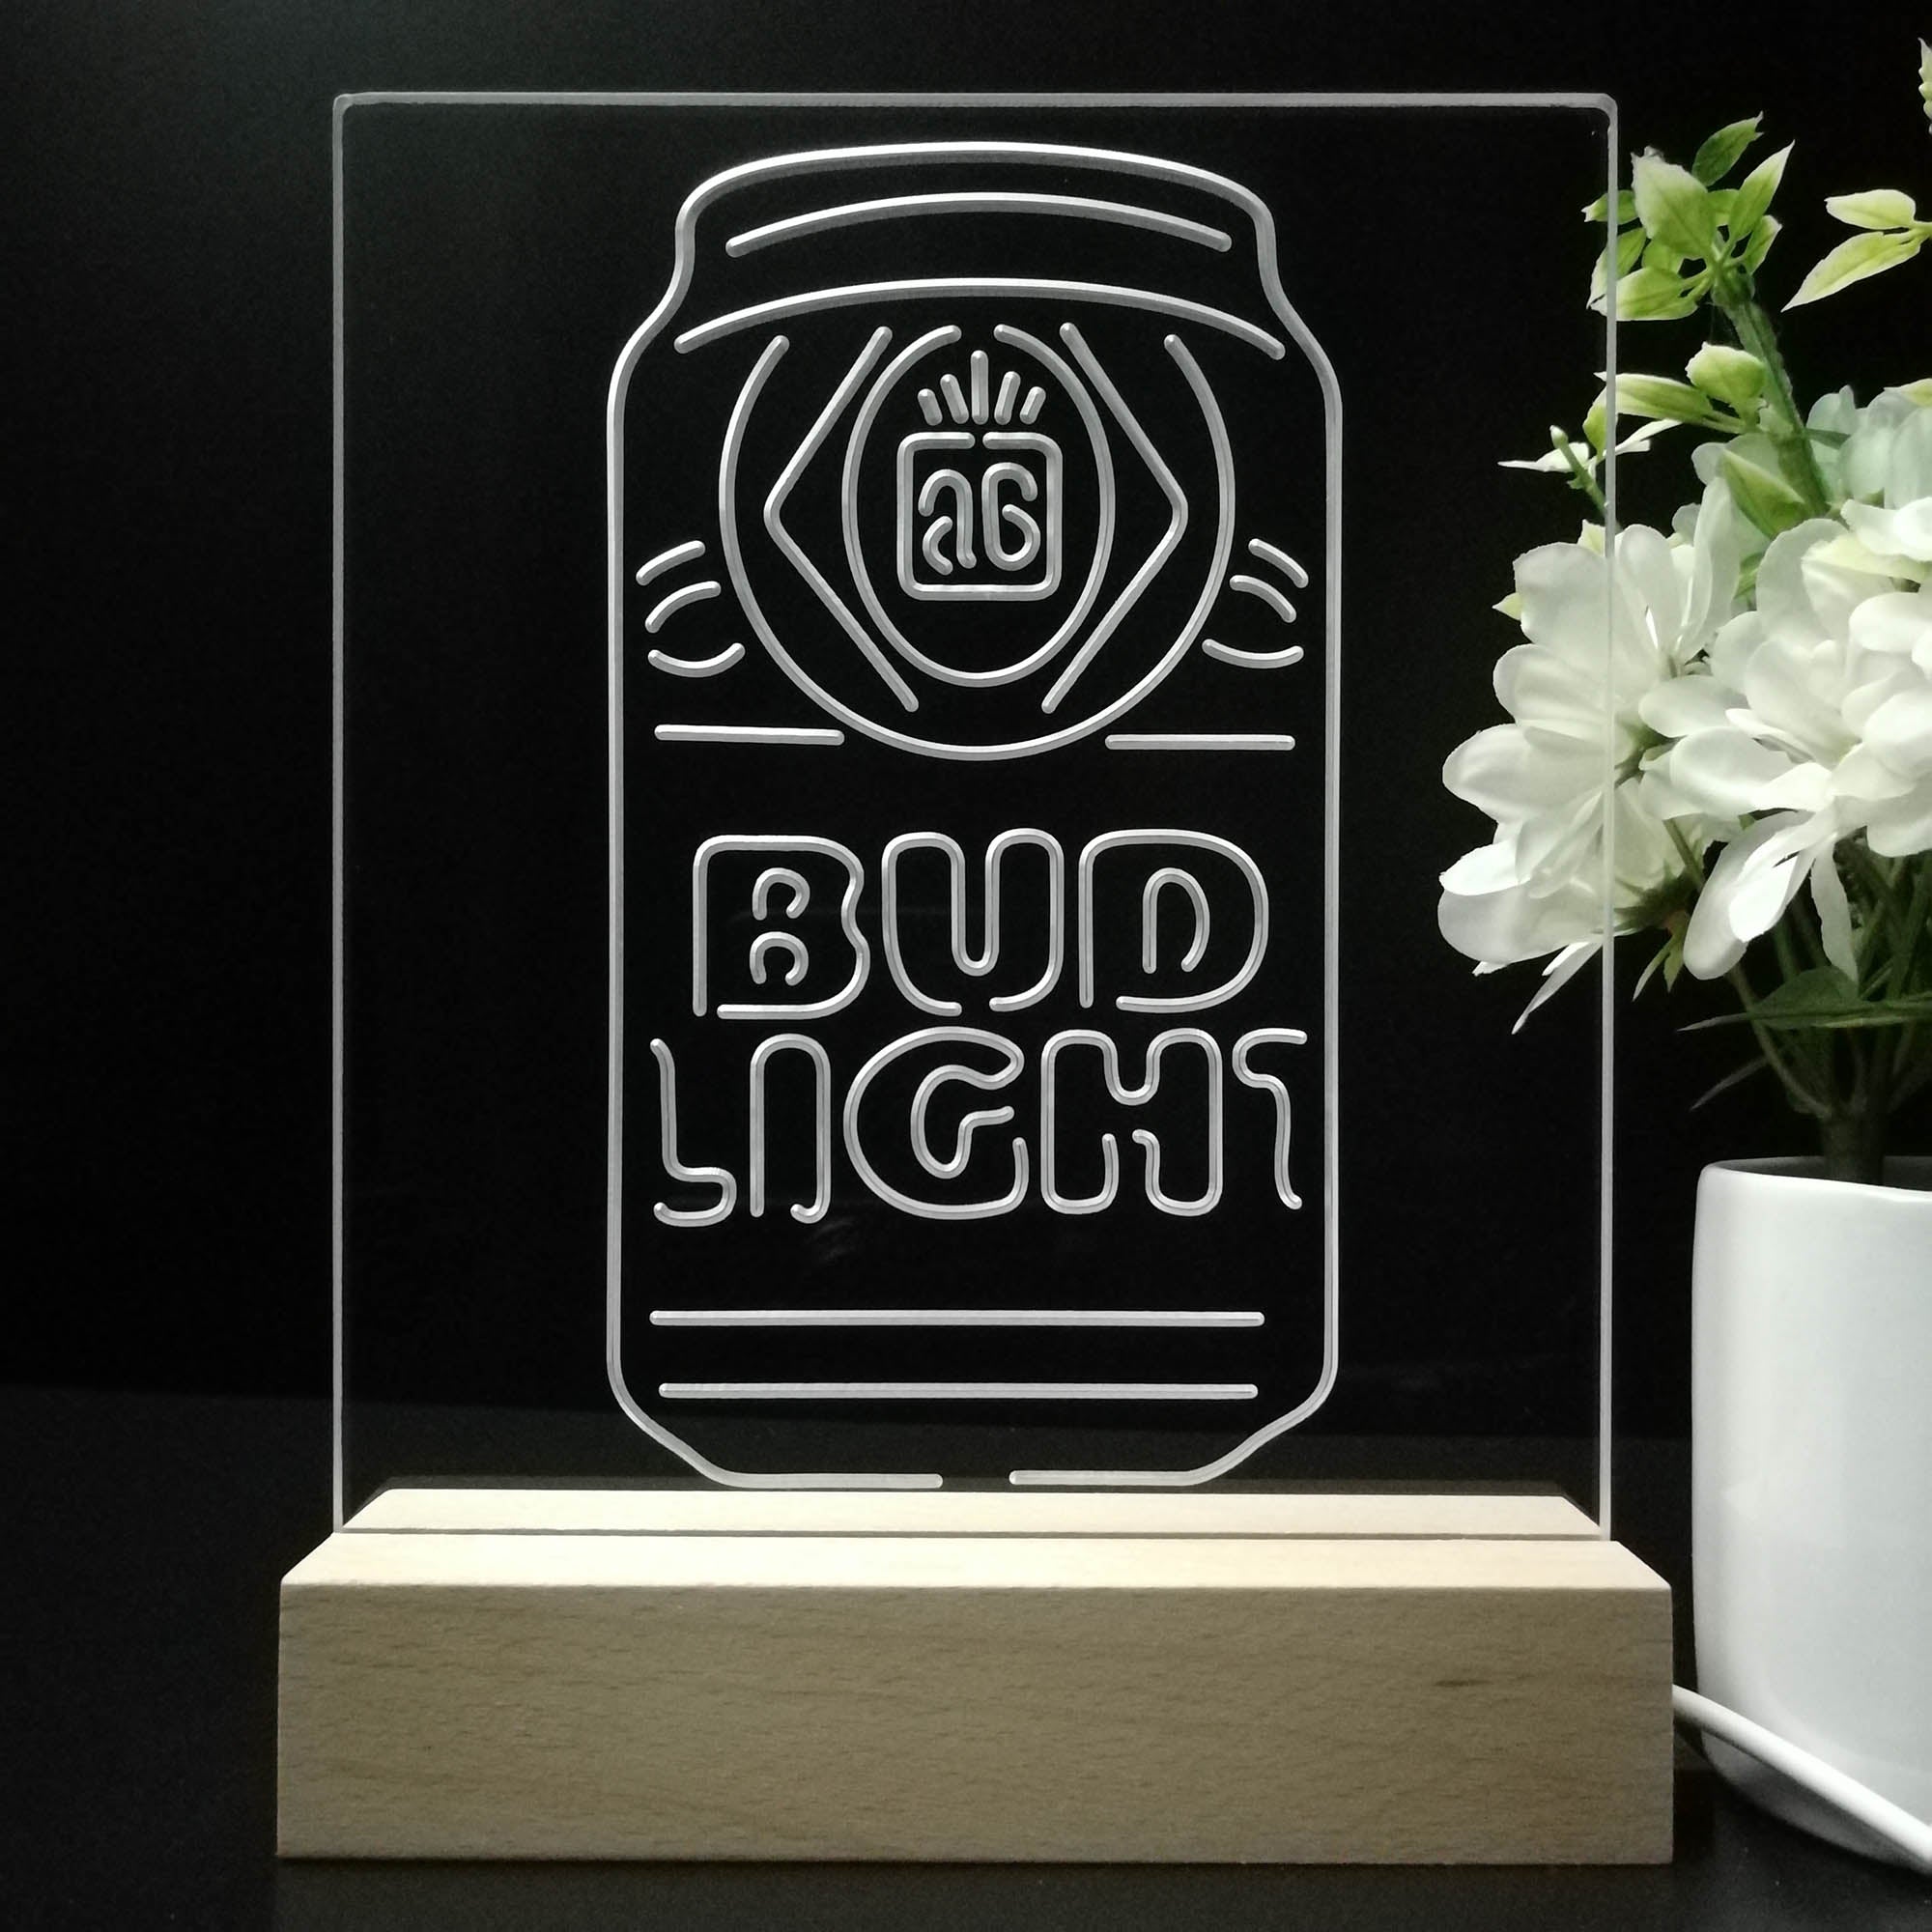 Bud Light Bottle Vertical Beer 3D LED Optical Illusion Night Light Table Lamp